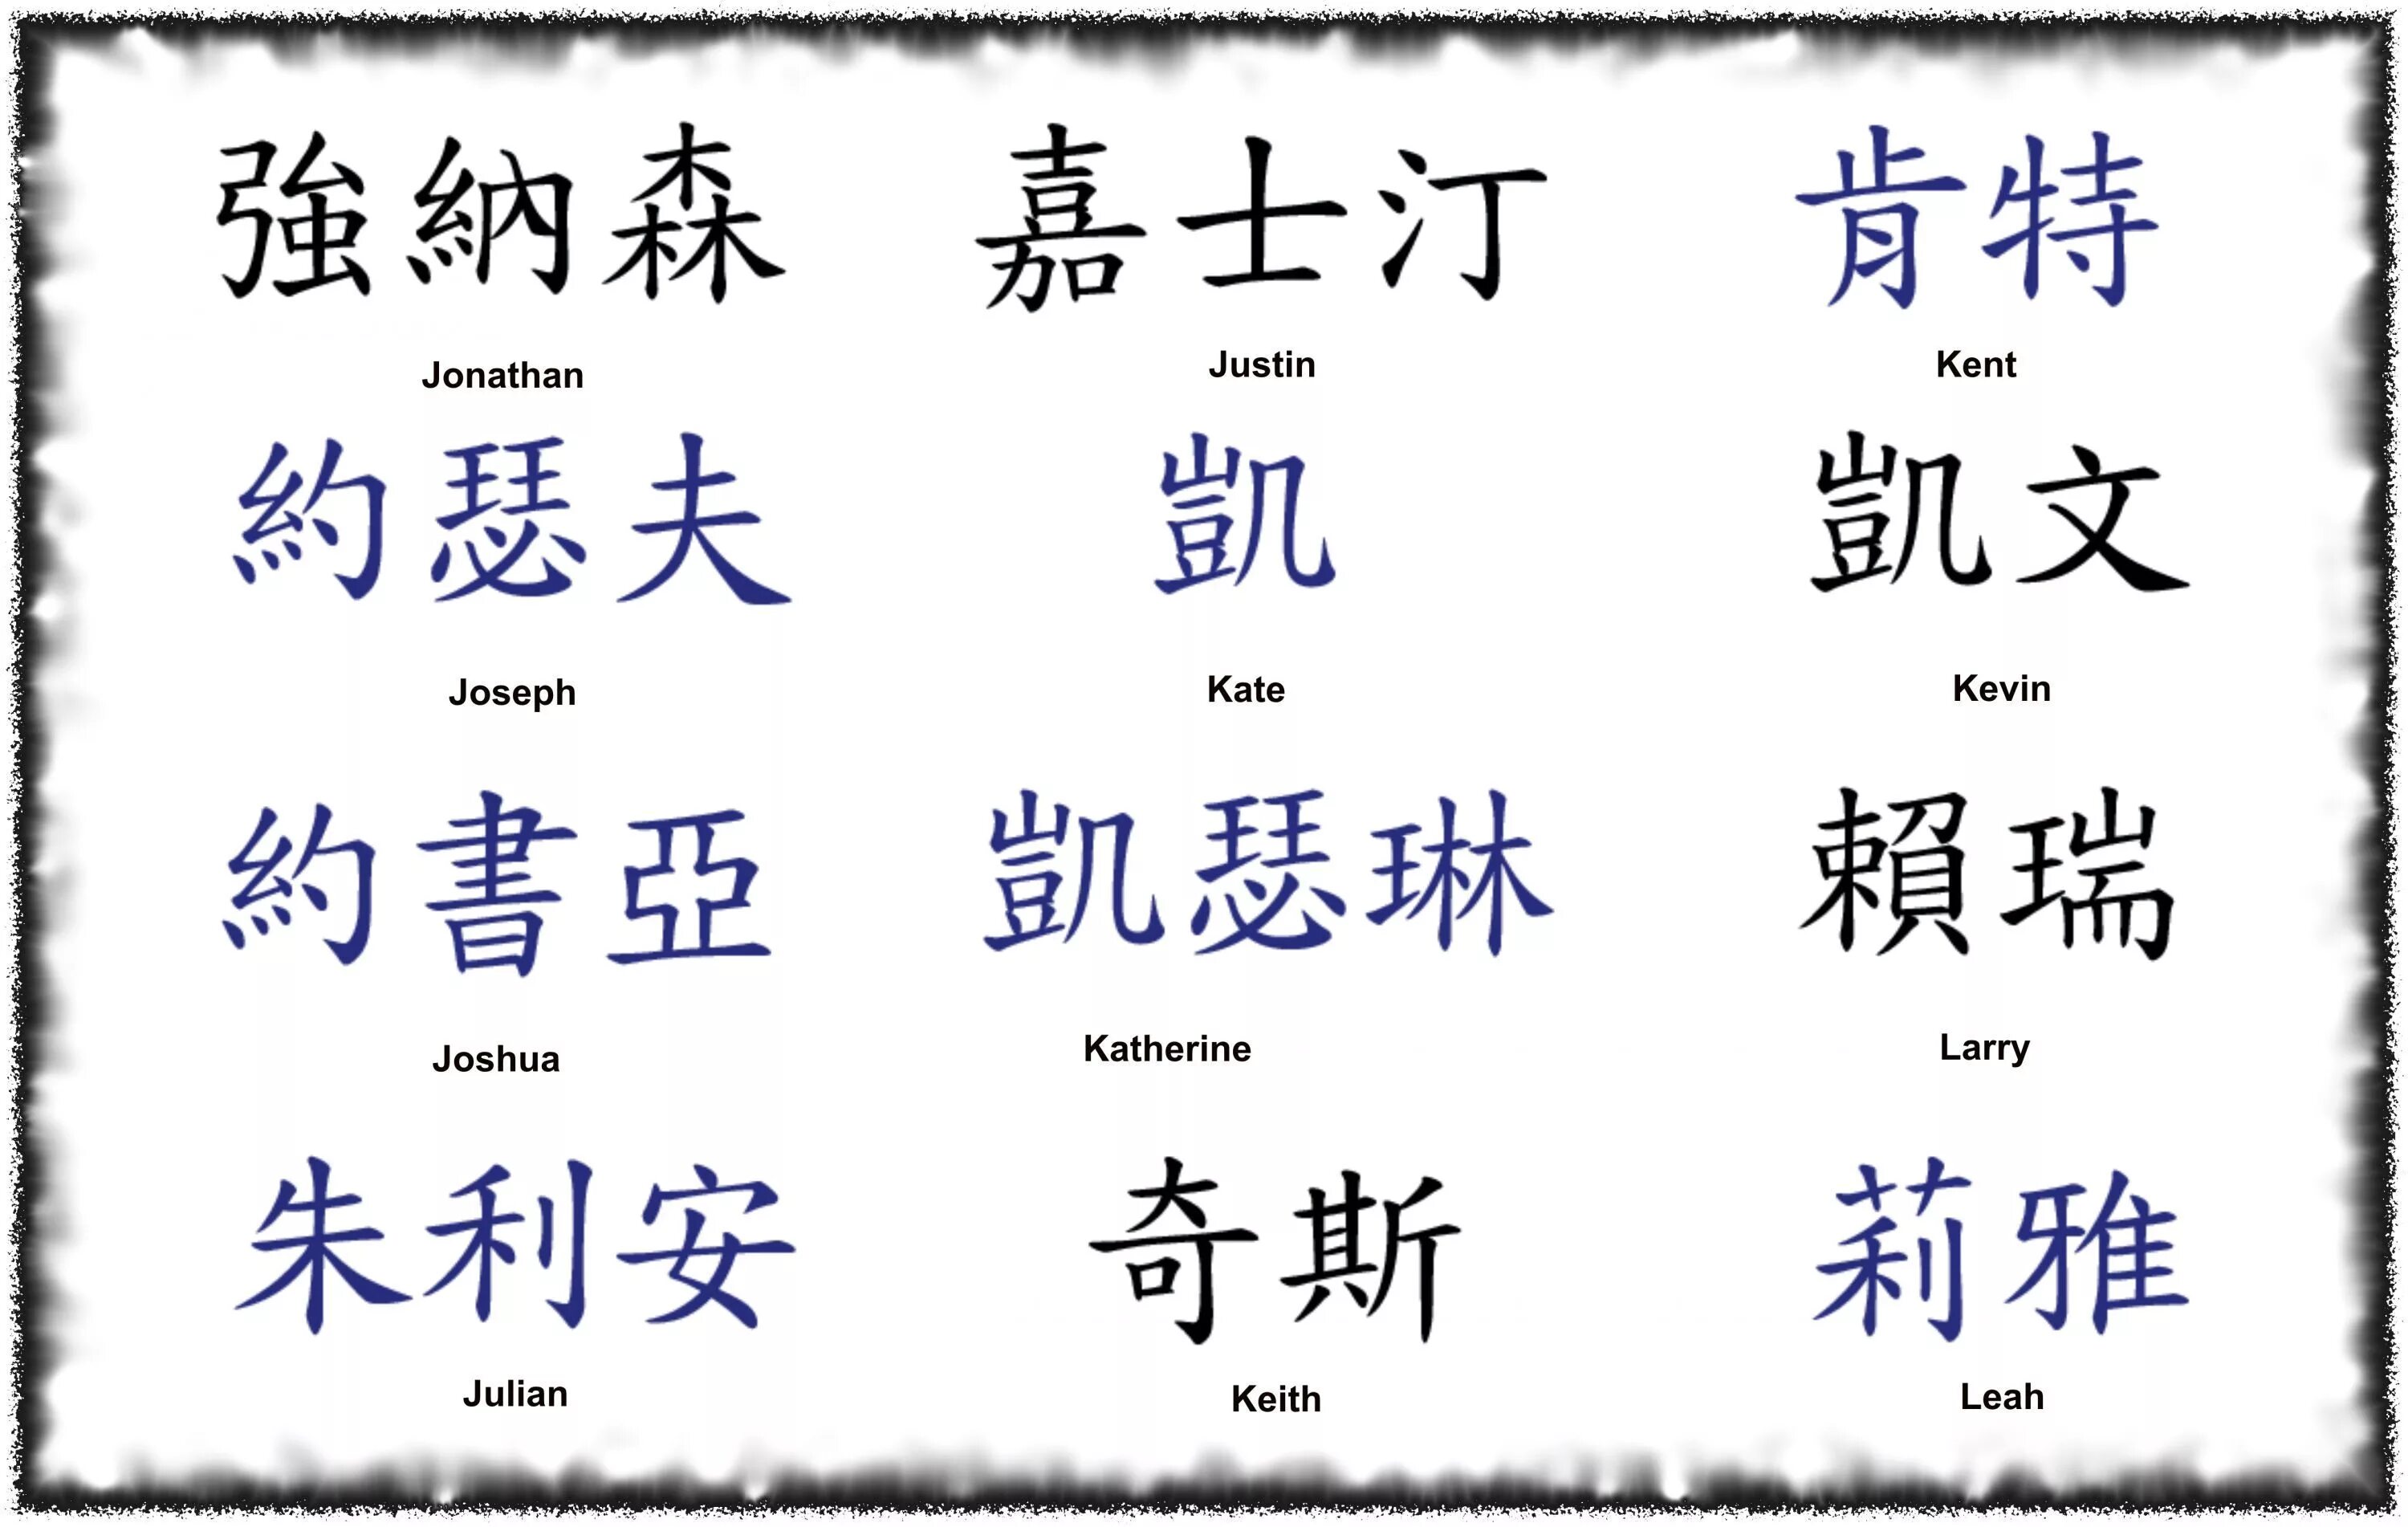 Как будет по китайски саша. Китайские тату. Иероглифы японские имена. Татуировки китайские иероглифы имена. Иероглиф имя.